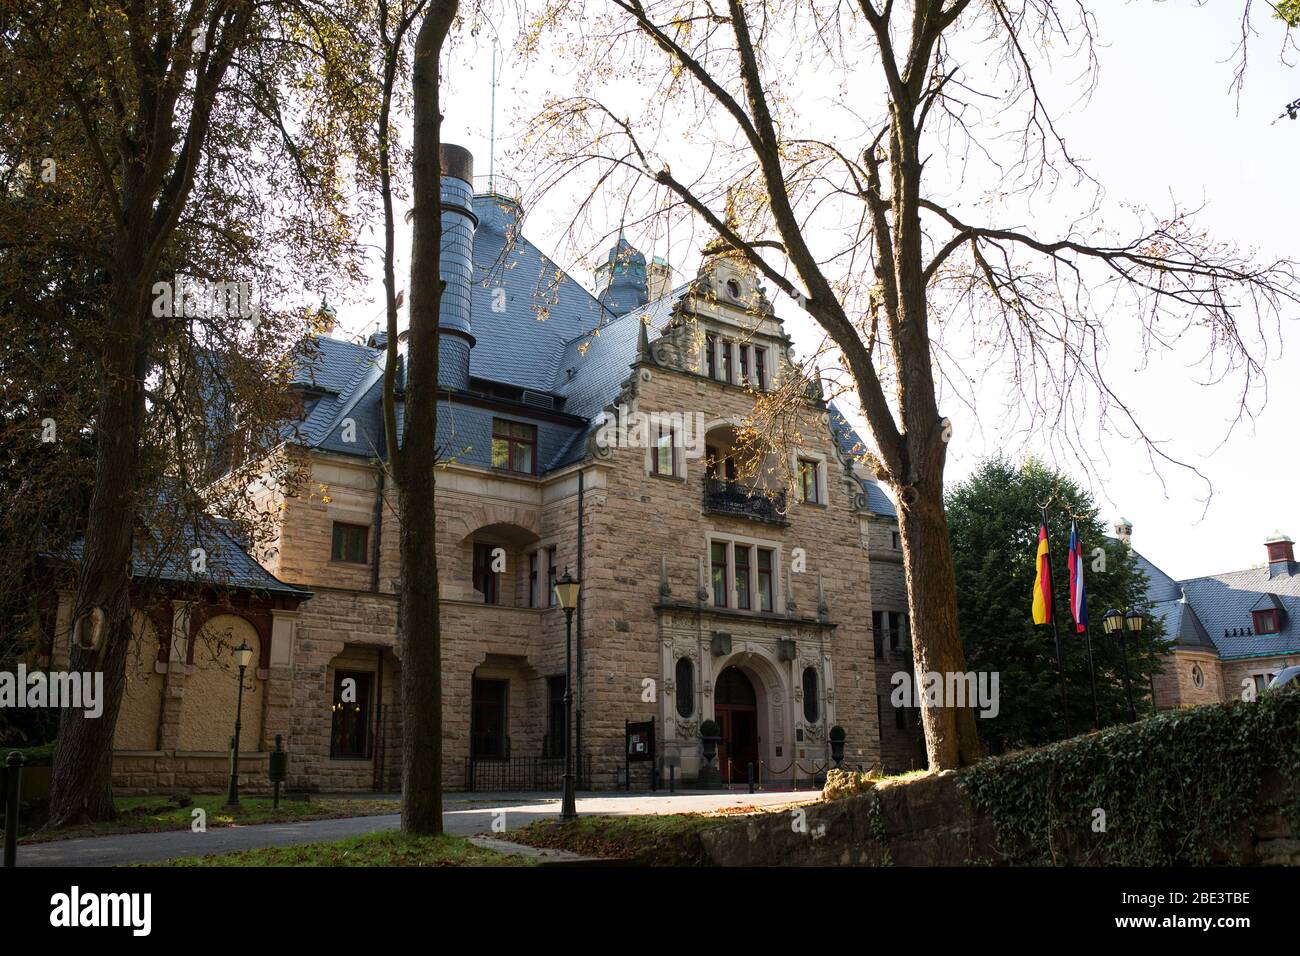 The Schloss Hotel Wolfsbrunnen in a 1904 castle in the Werra Valley in Meinhard, Hesse, Germany. Stock Photo